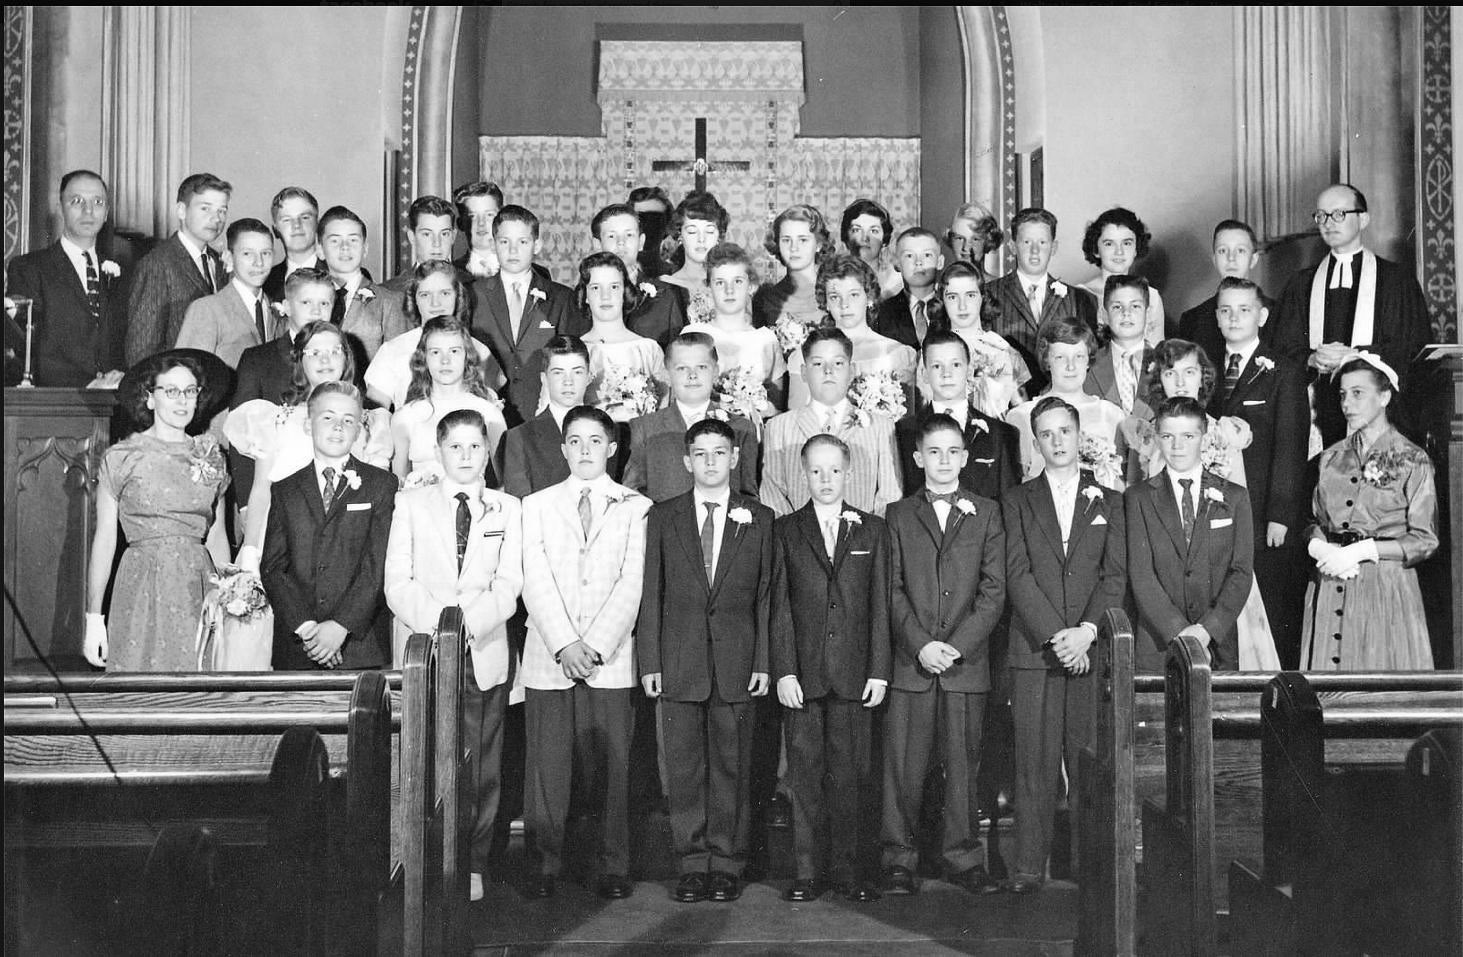 Immanuel Union confirmation 1958 (photo B edit)